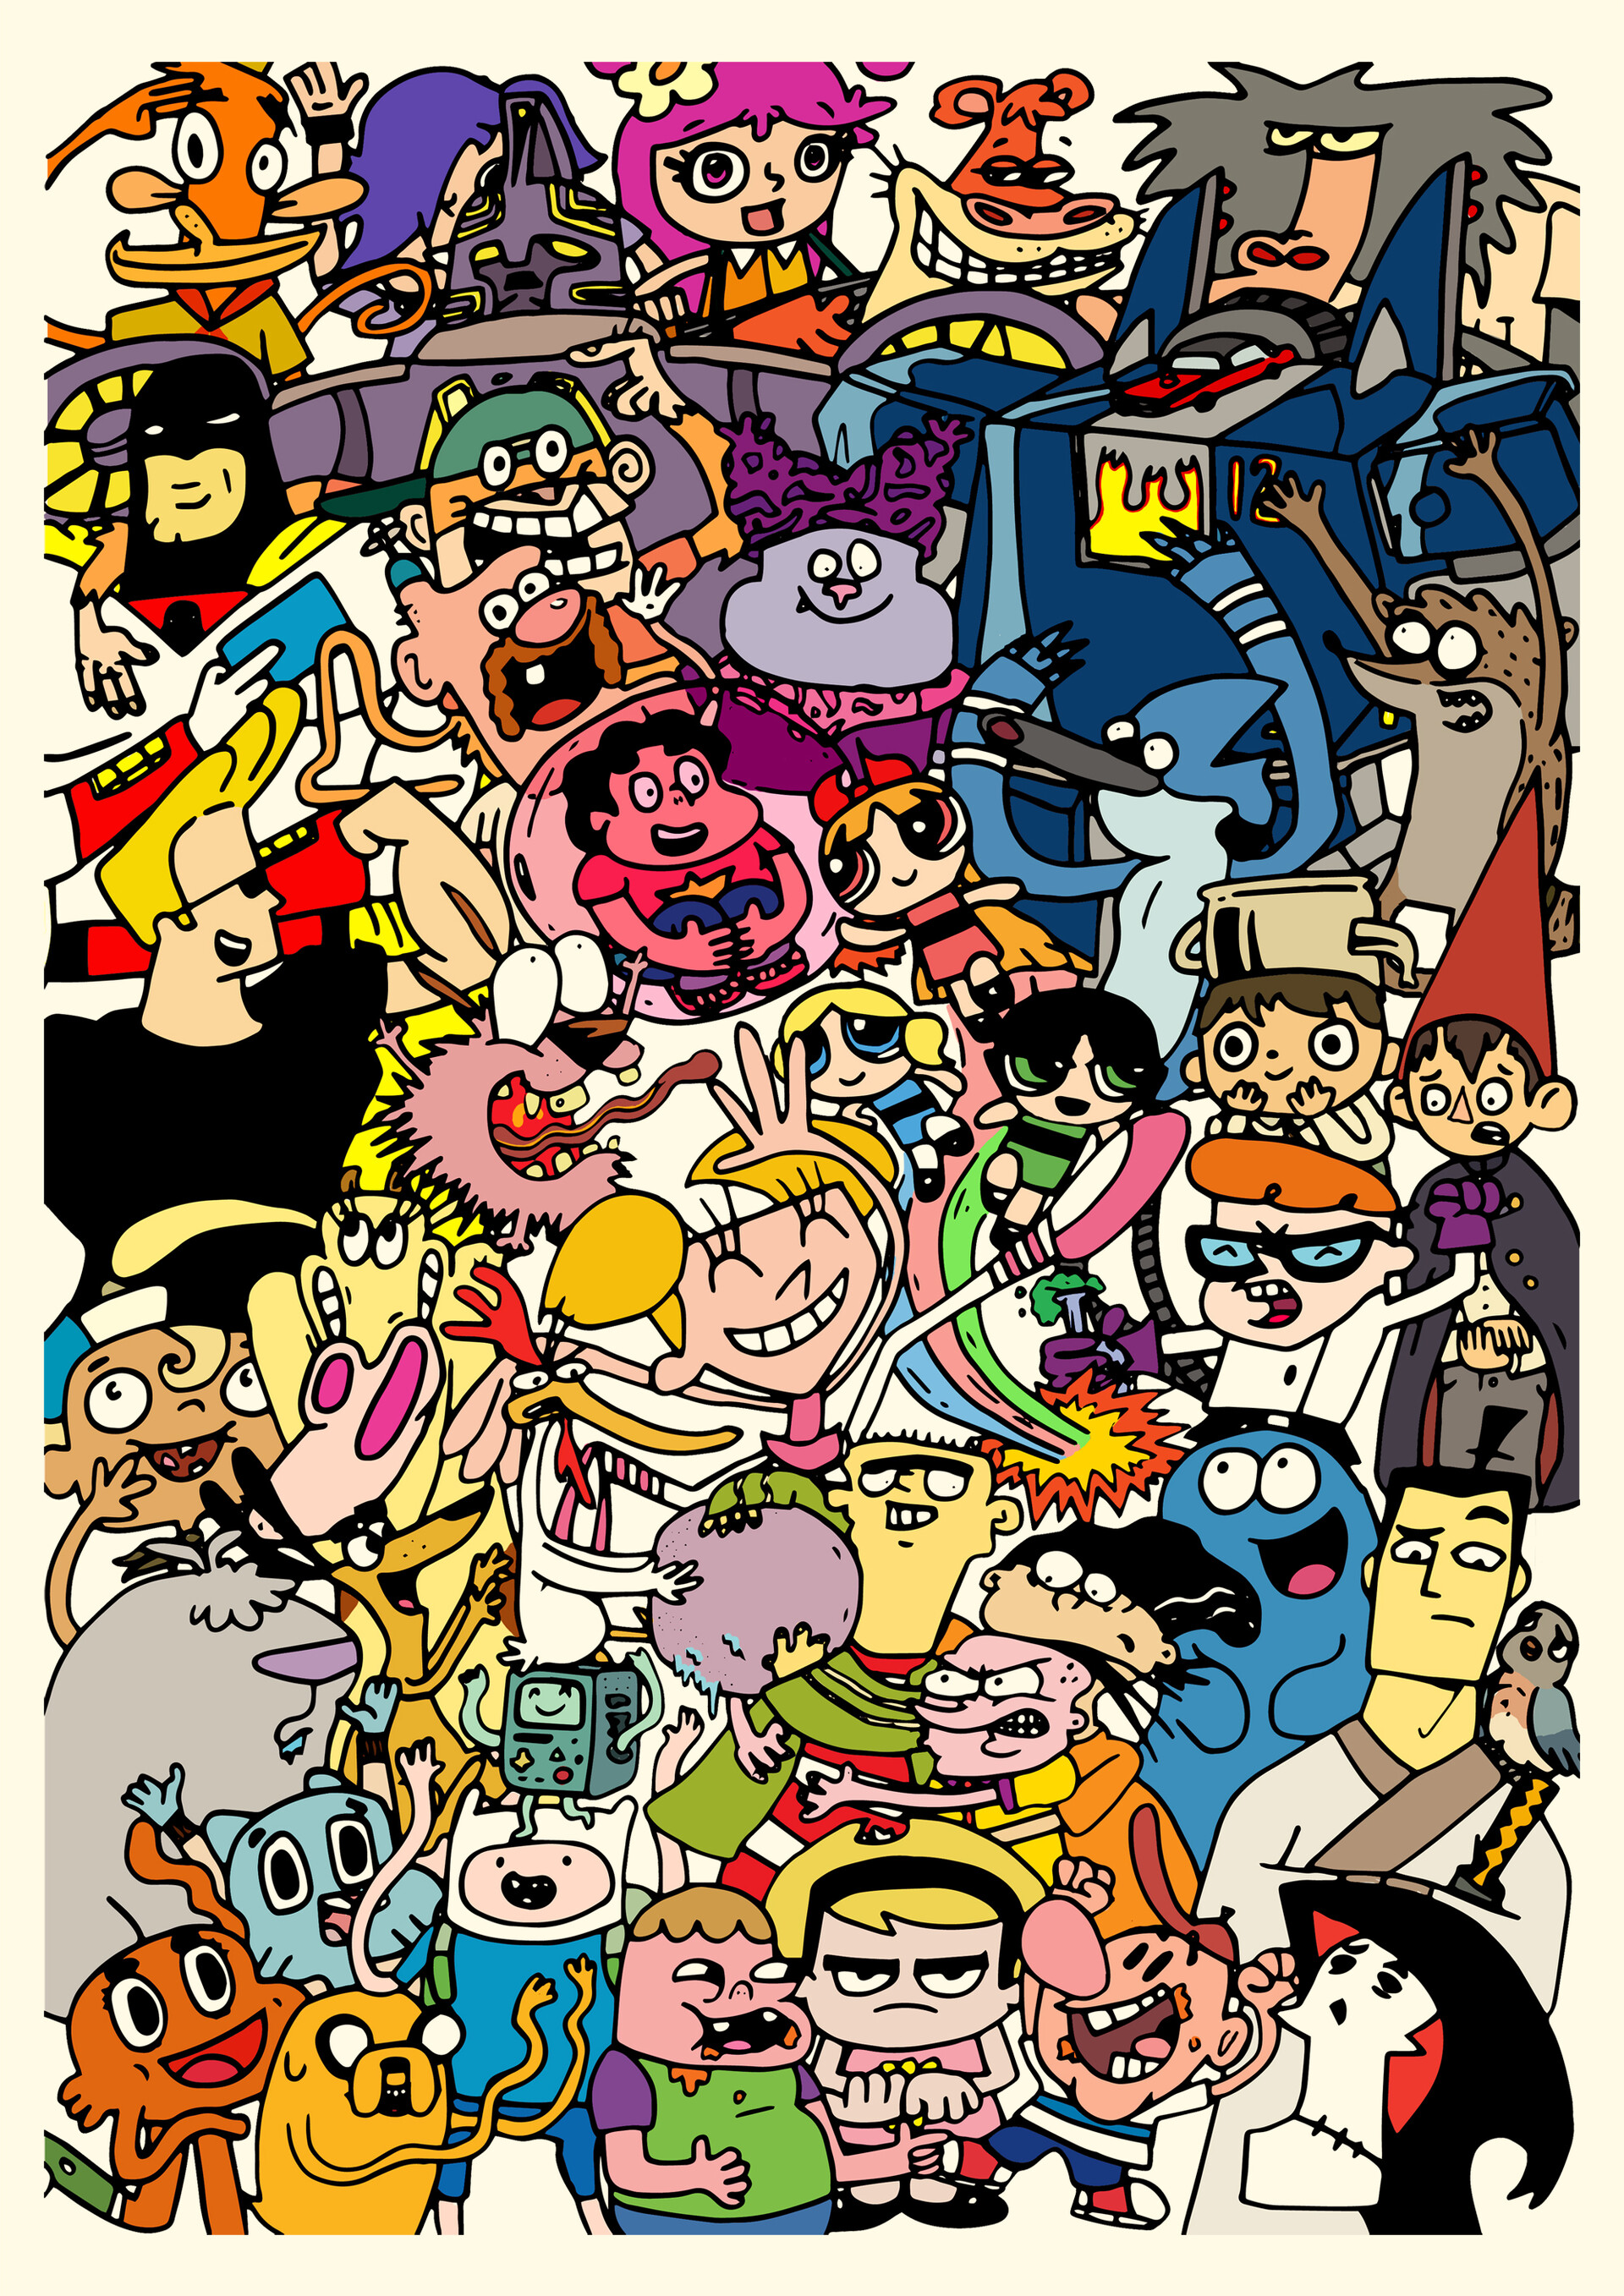 ArtStation - *Unofficial* Cartoon Network Poster